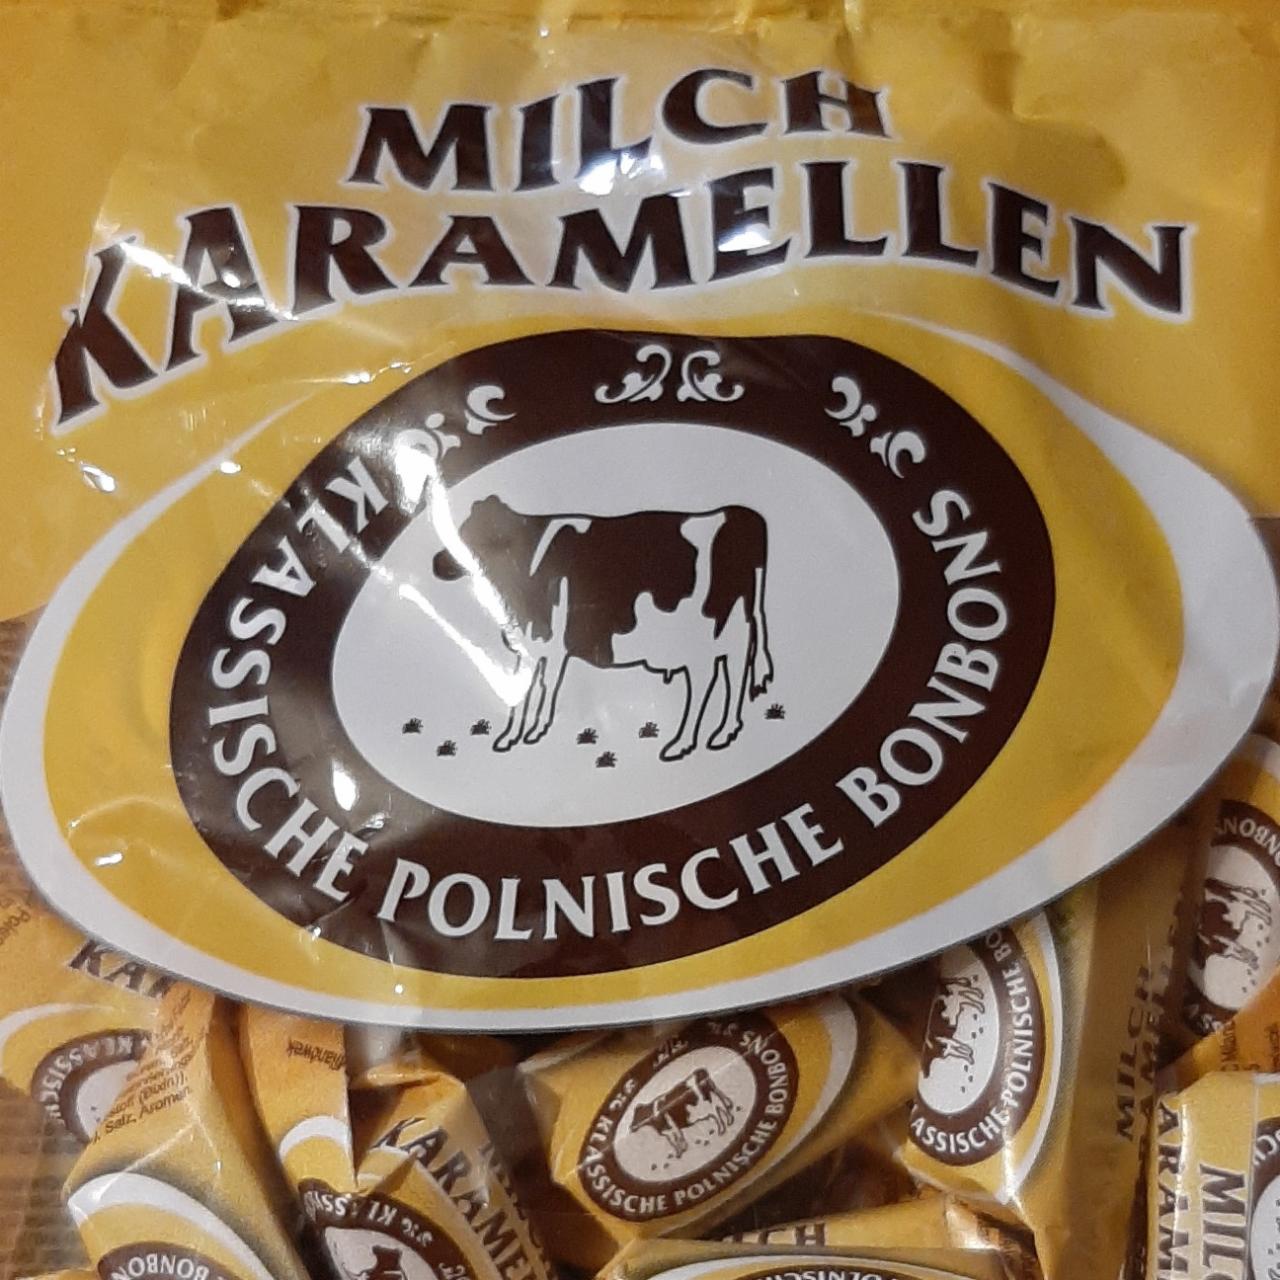 Fotografie - Milch Karamellen Klassische Polnische Bonbons